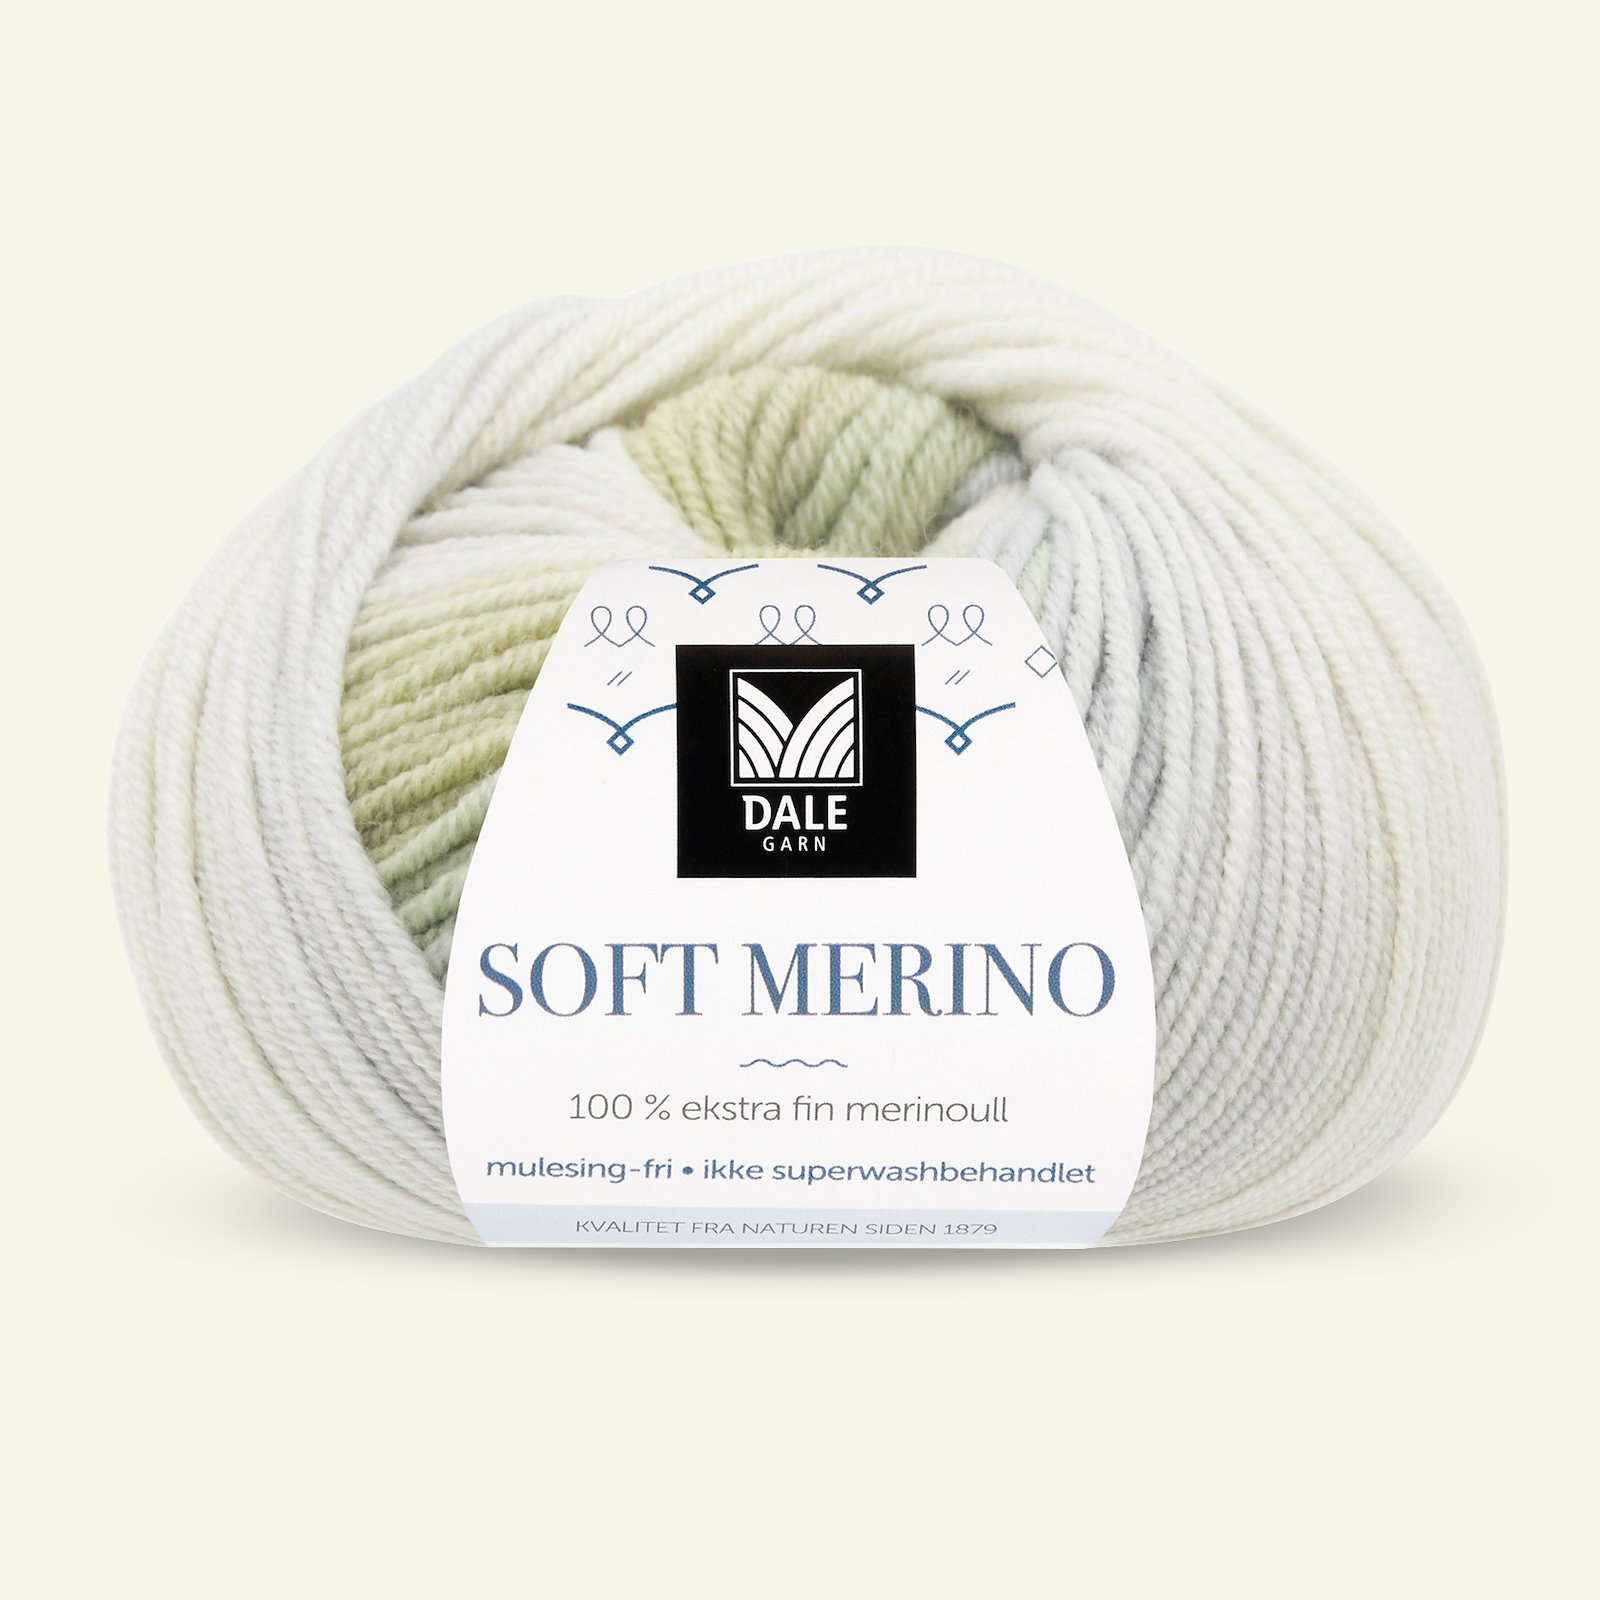 Dale Garn, 100% extra fine merino wool yarn "Soft Merino", mint printed 90001223_pack